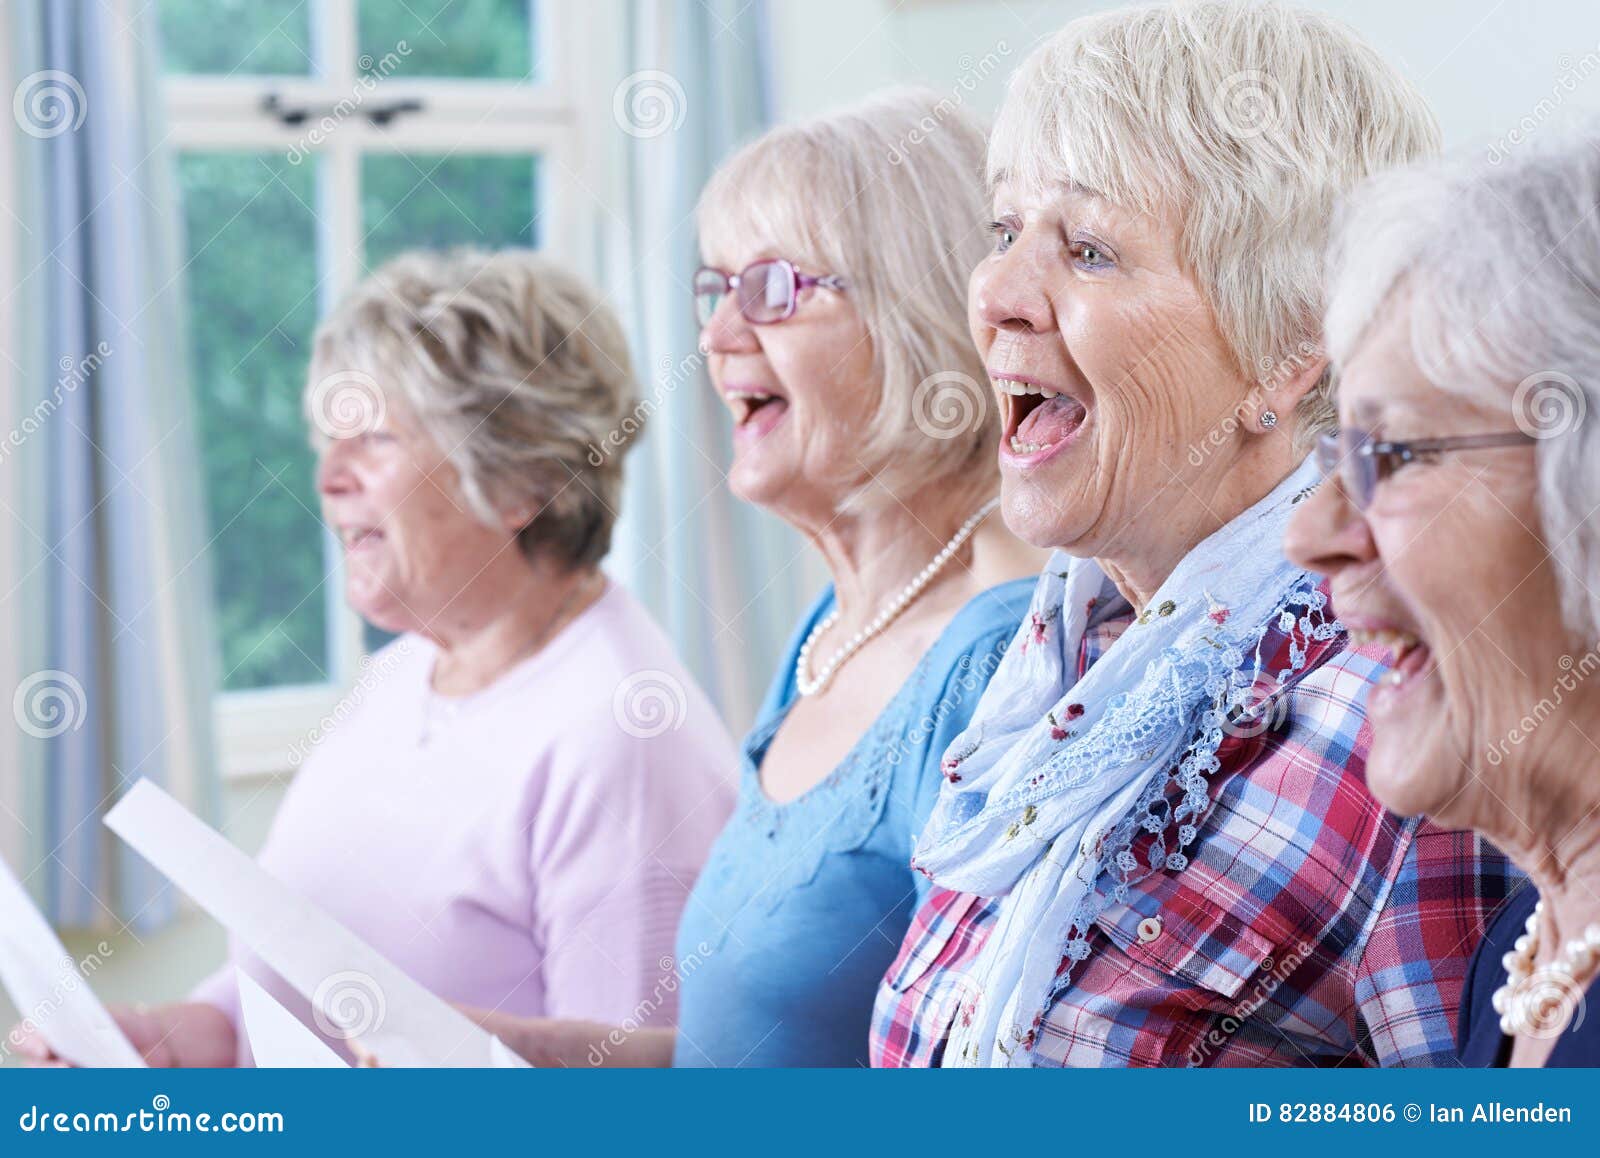 group of senior women singing in choir together